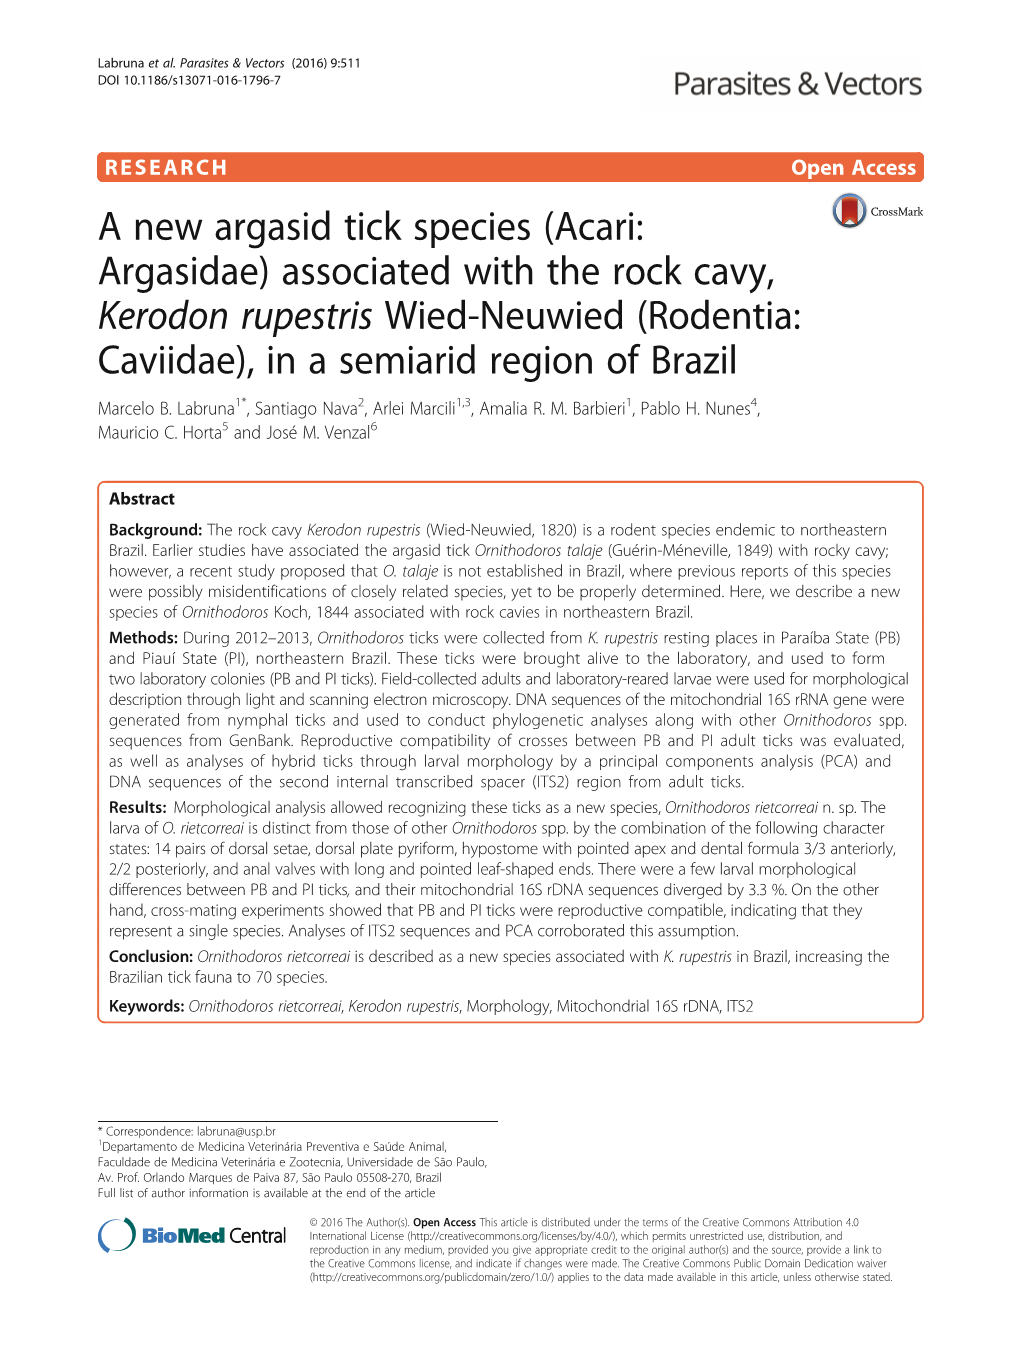 Associated with the Rock Cavy, Kerodon Rupestris Wied-Neuwied (Rodentia: Caviidae), in a Semiarid Region of Brazil Marcelo B